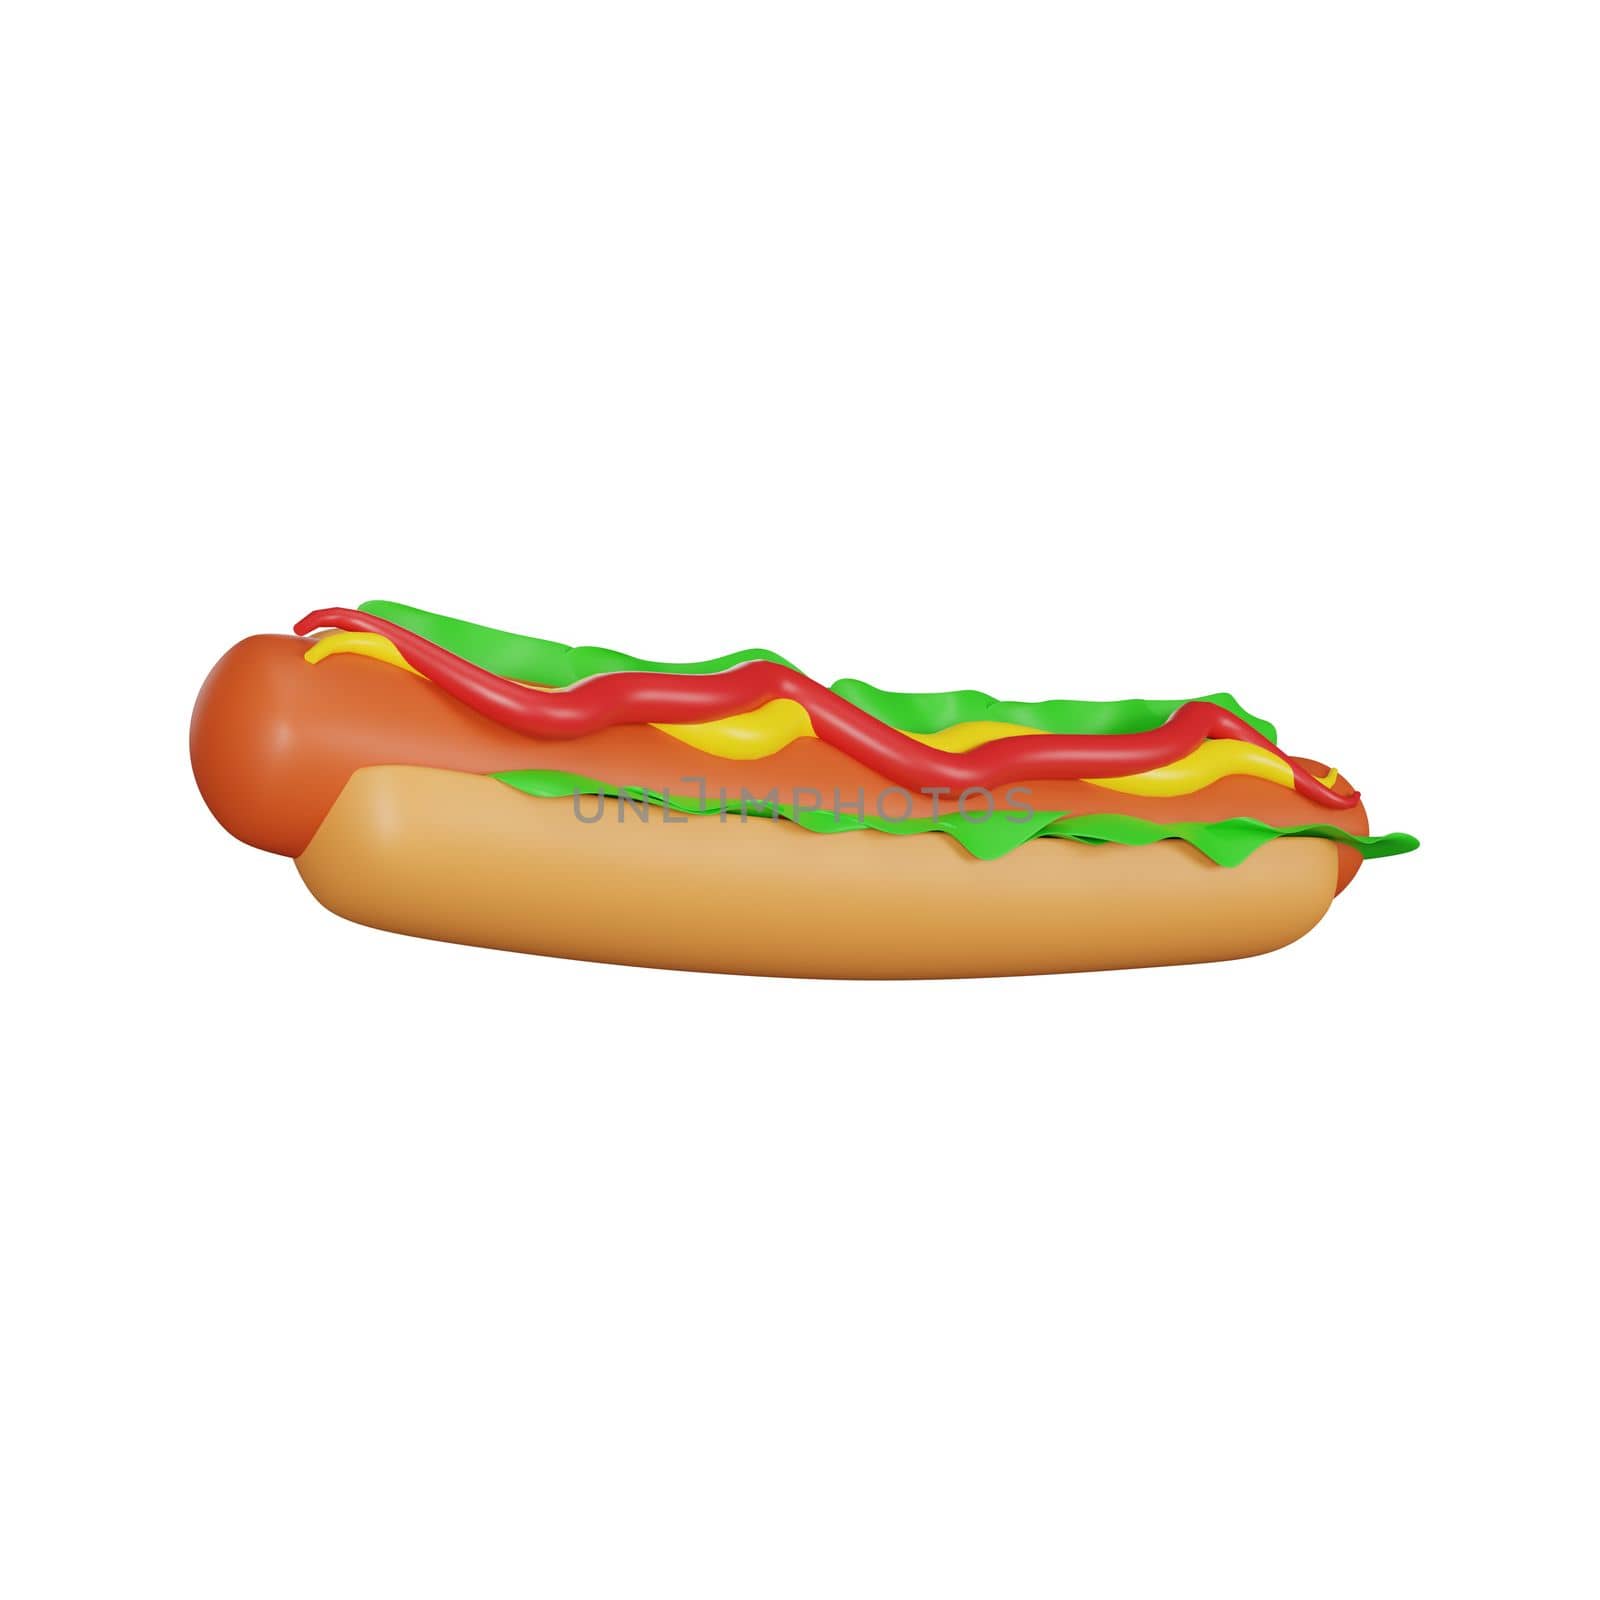 3d rendering of hot dog junk food icon by Rahmat_Djayusman